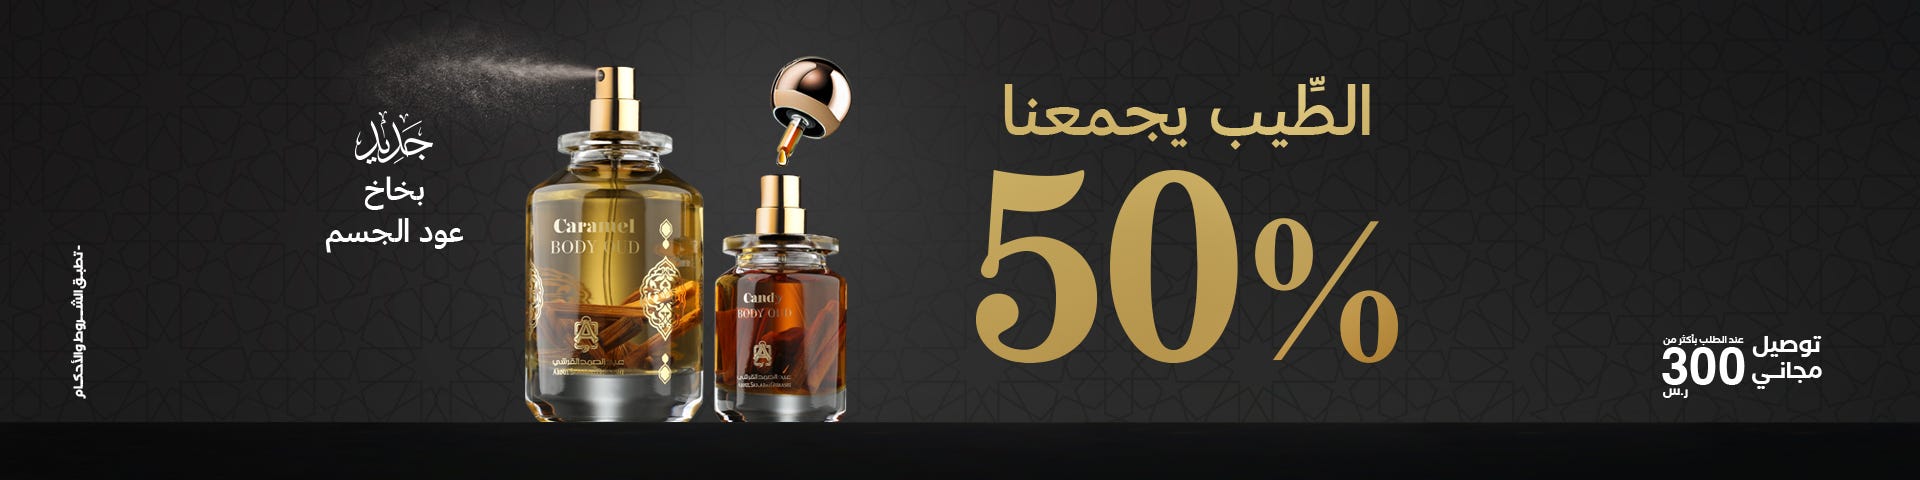 50 gift E store Banner A 5. - عروض العطور في عبدالصمد القرشي مع خصم 50%